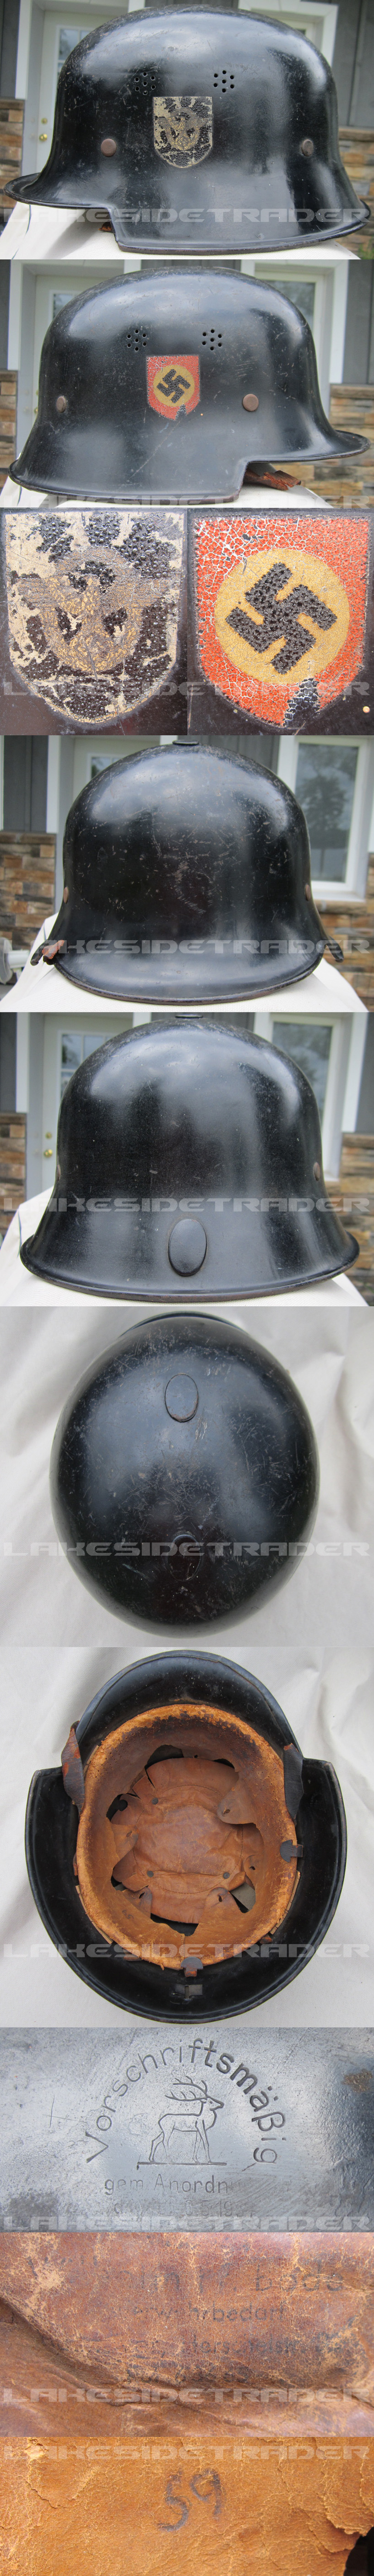 M34 Fire Police Helmet